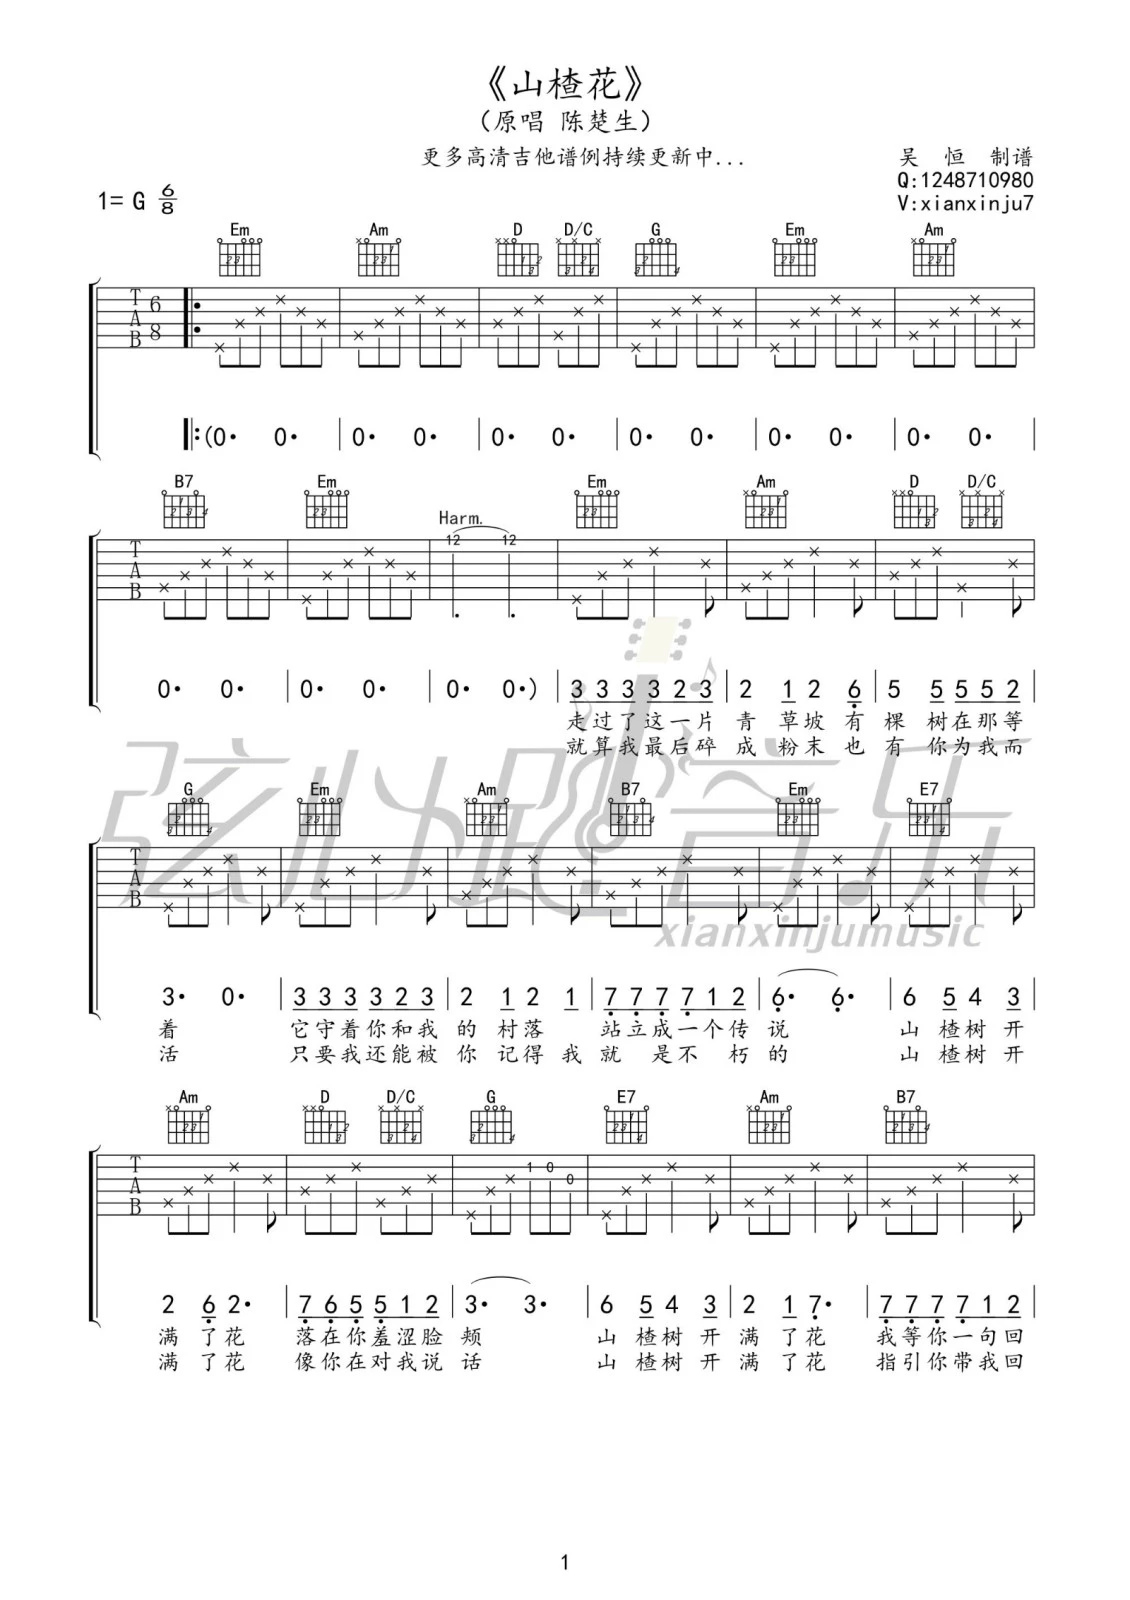 G调《山楂树》吉他谱简单的和弦 - 陈楚生六线谱 - 吉他谱简谱 - 吉他简谱